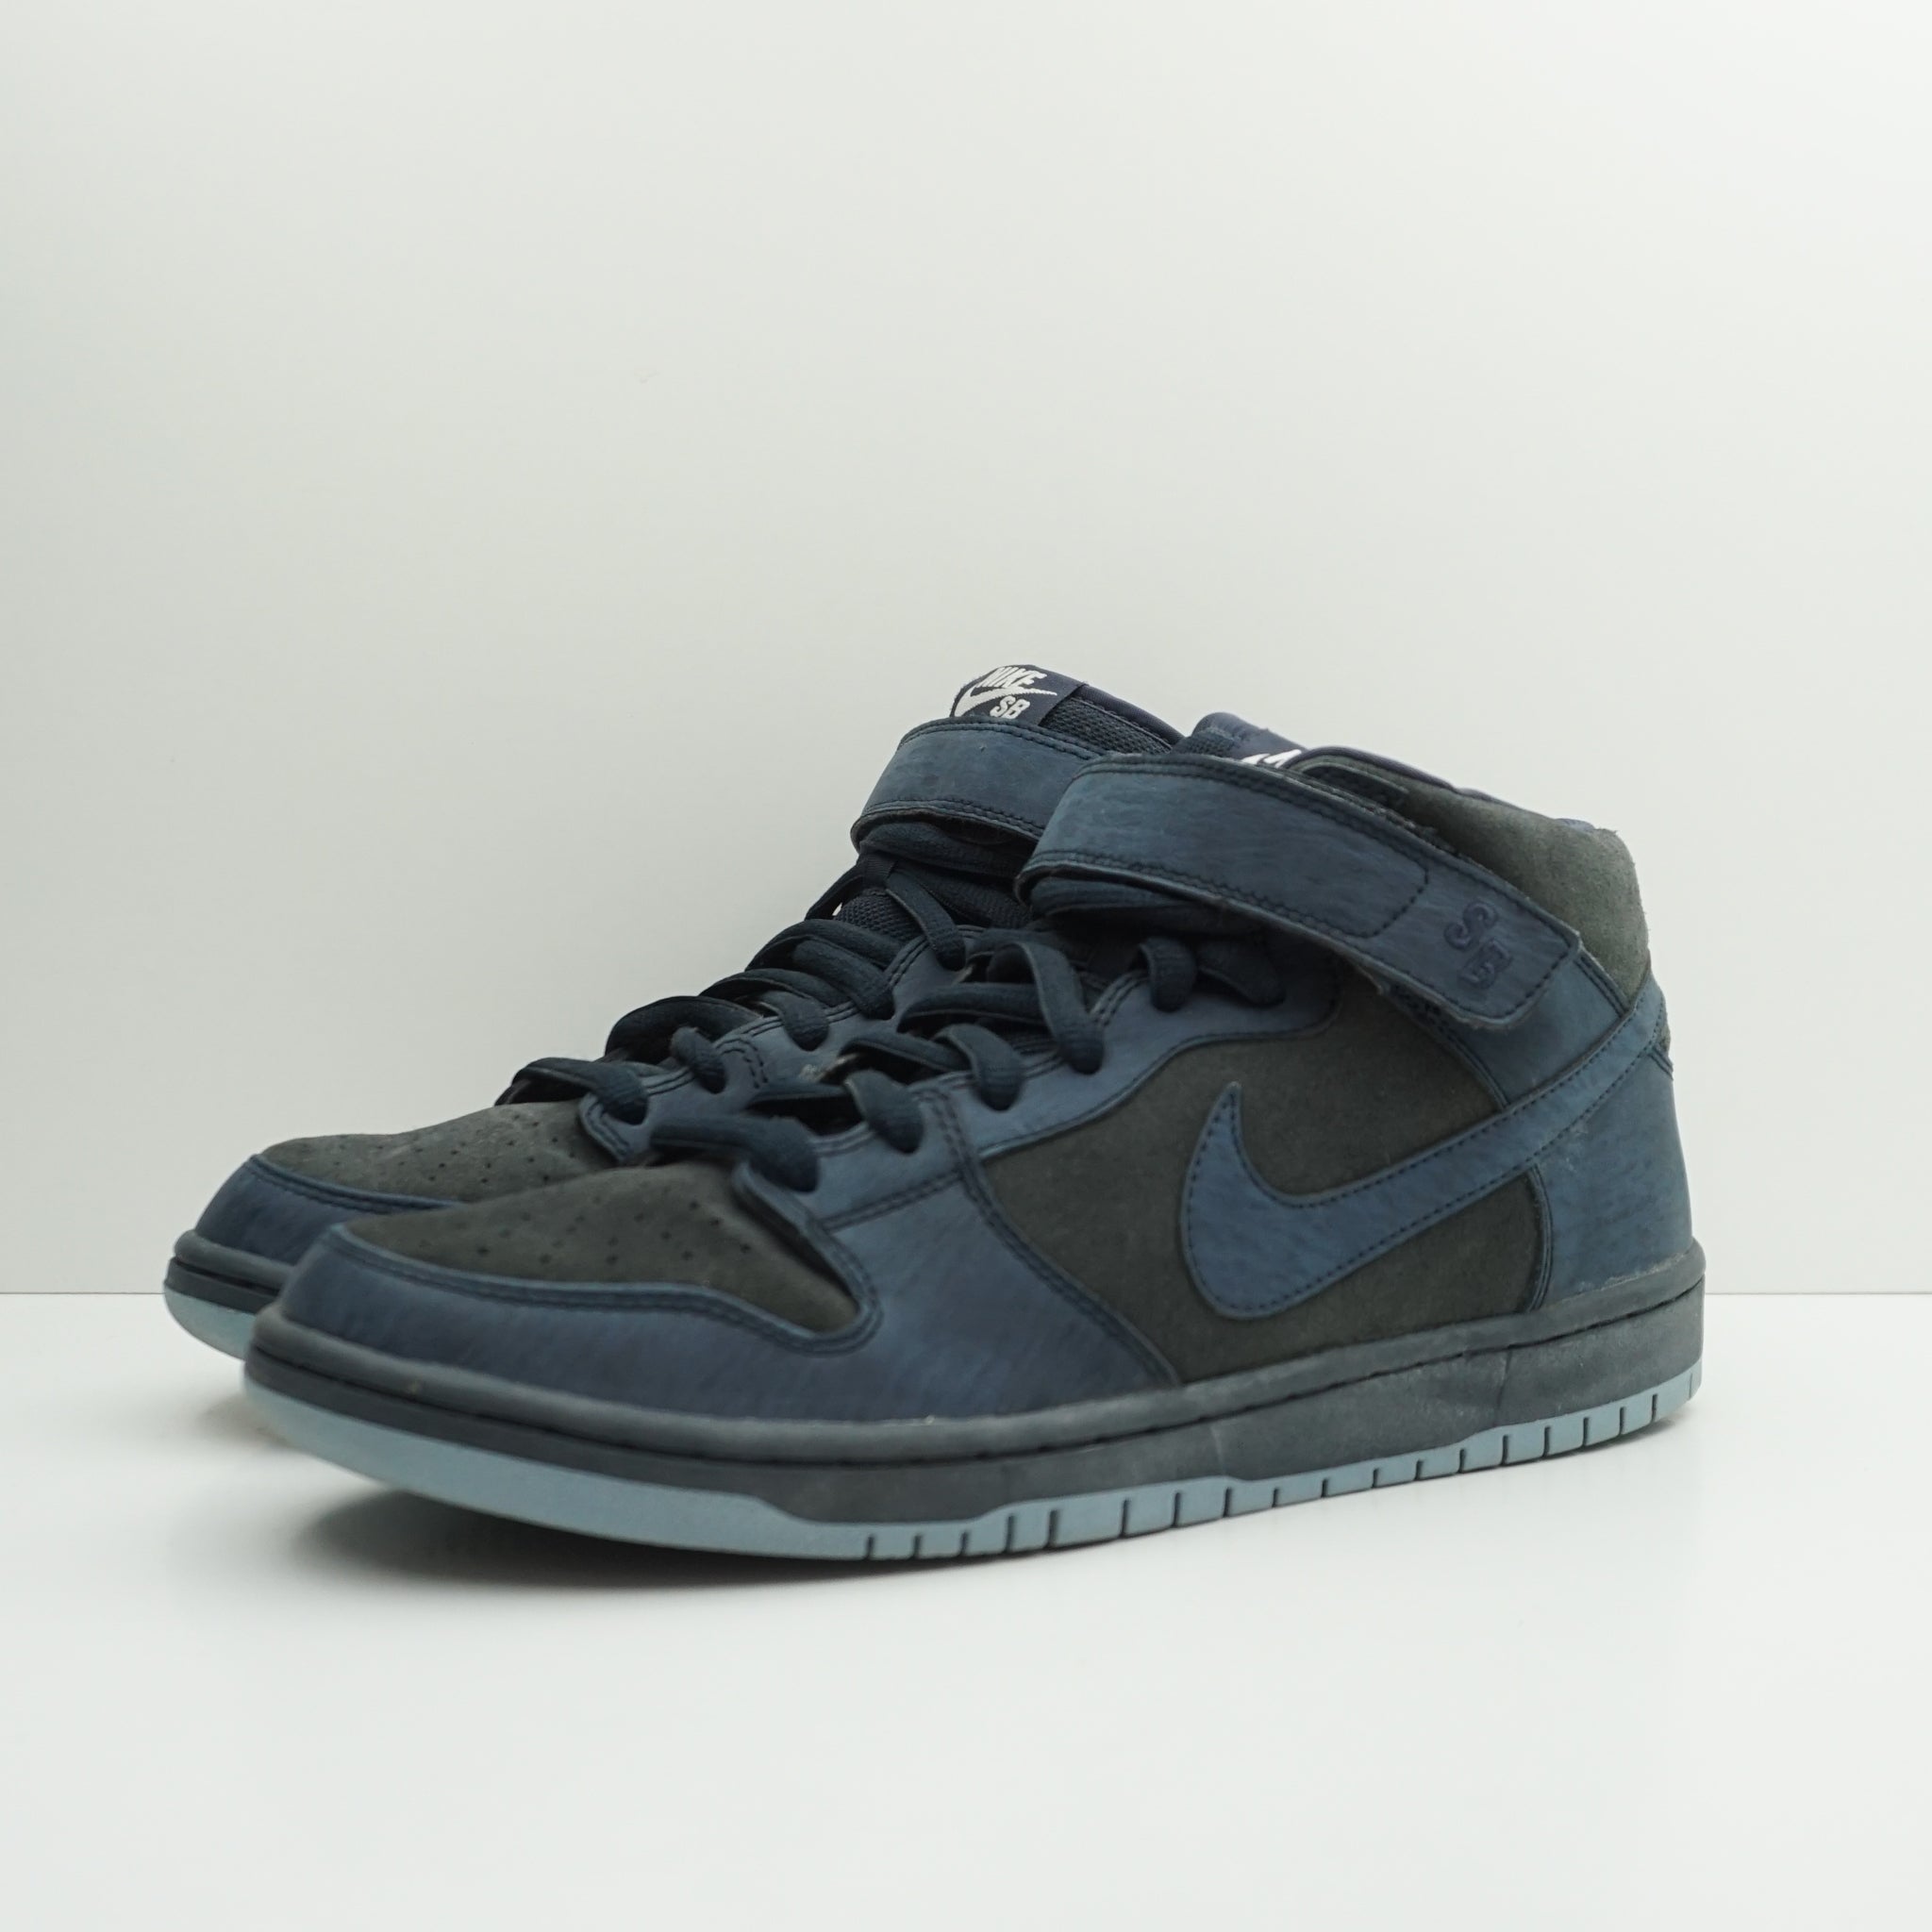 Nike SB Dunk Mid Obsidian Navy Blue